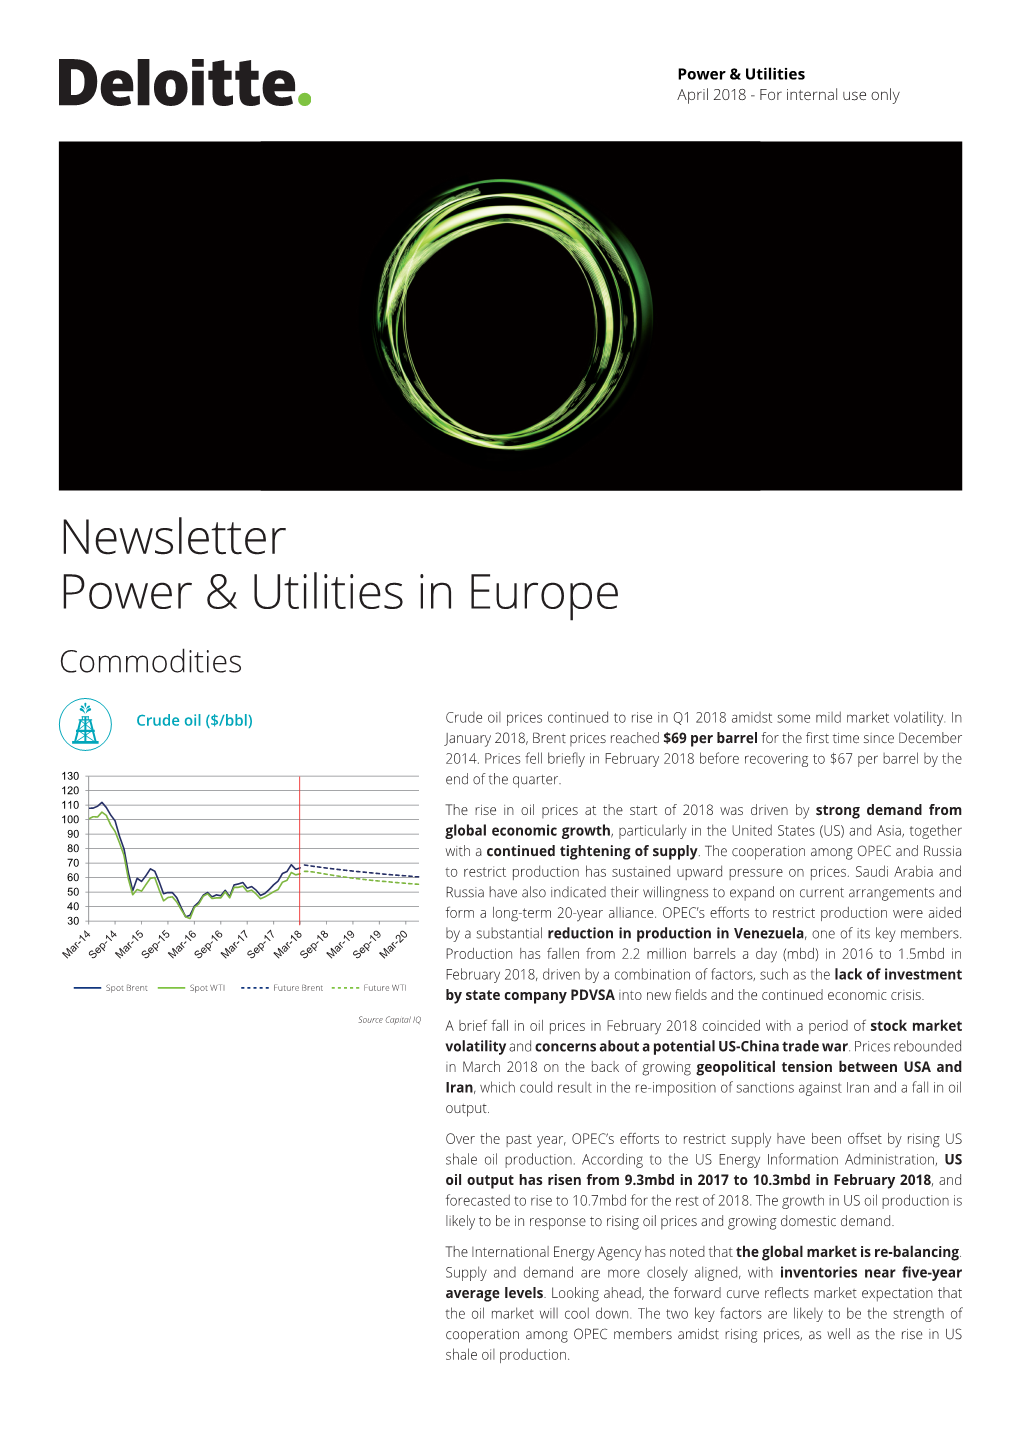 Newsletter Power & Utilities in Europe